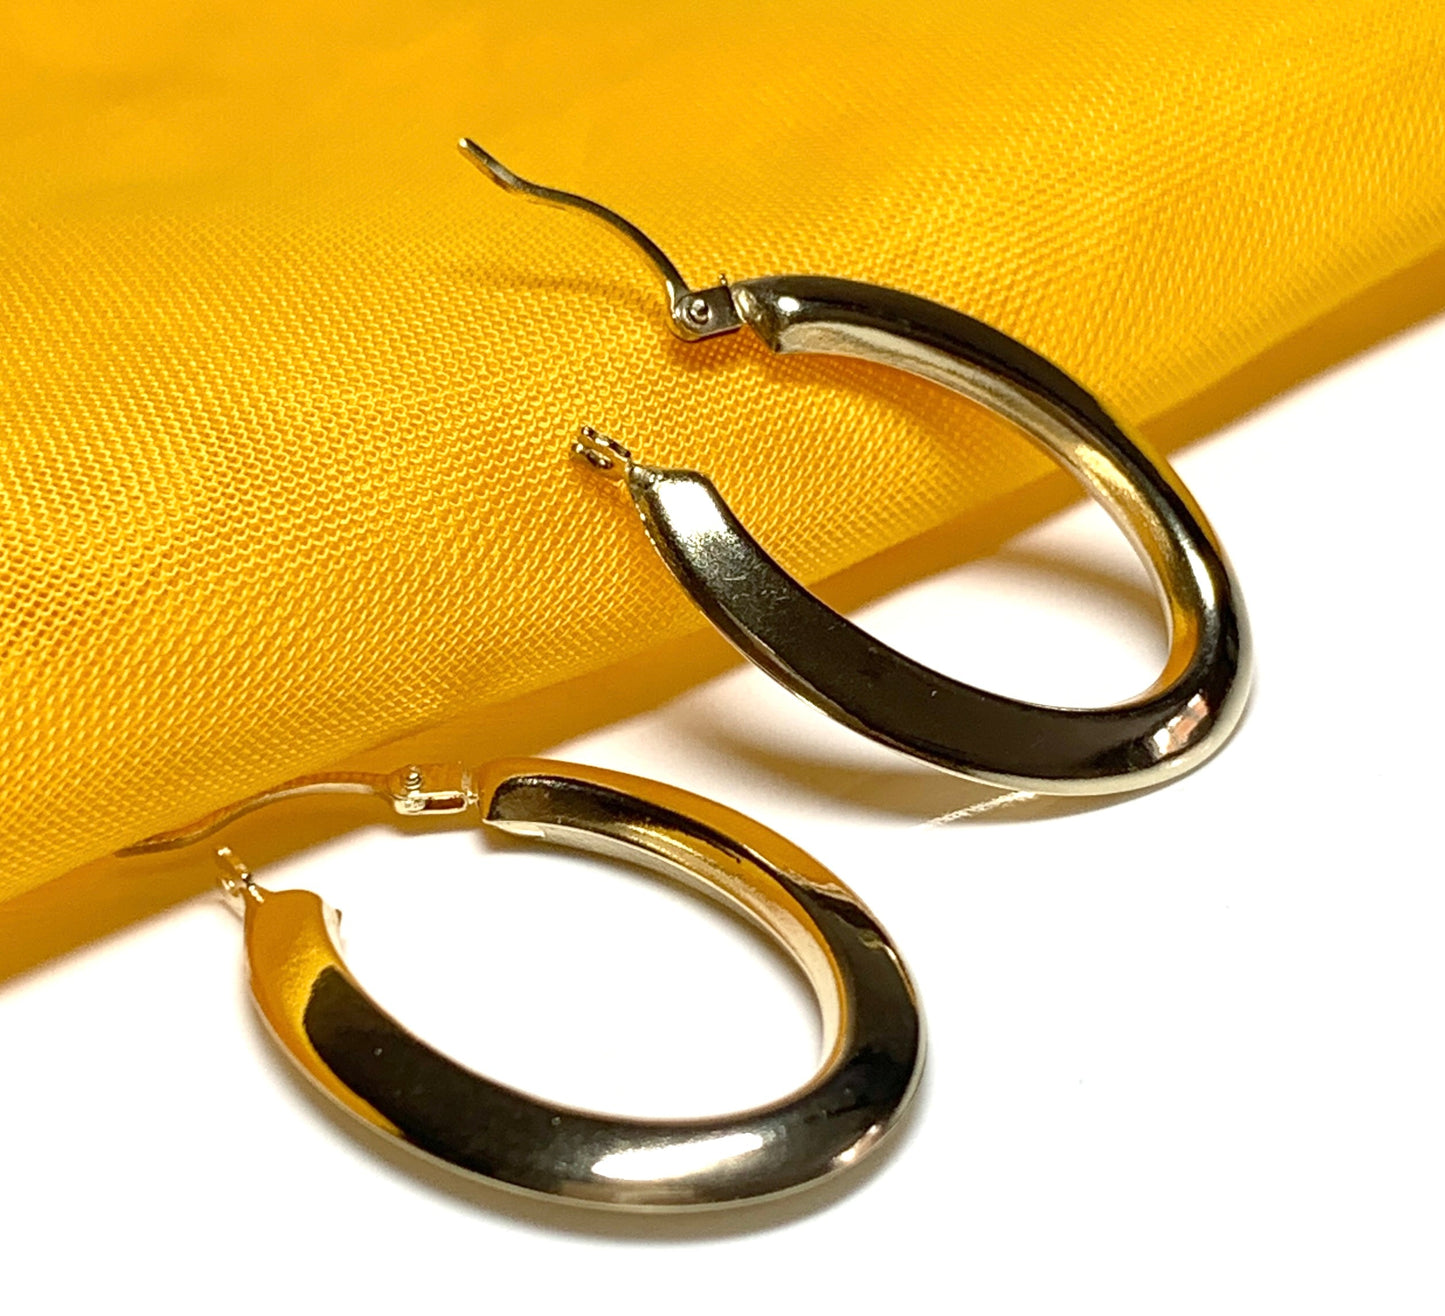 Oval hoop earrings yellow gold polished plain